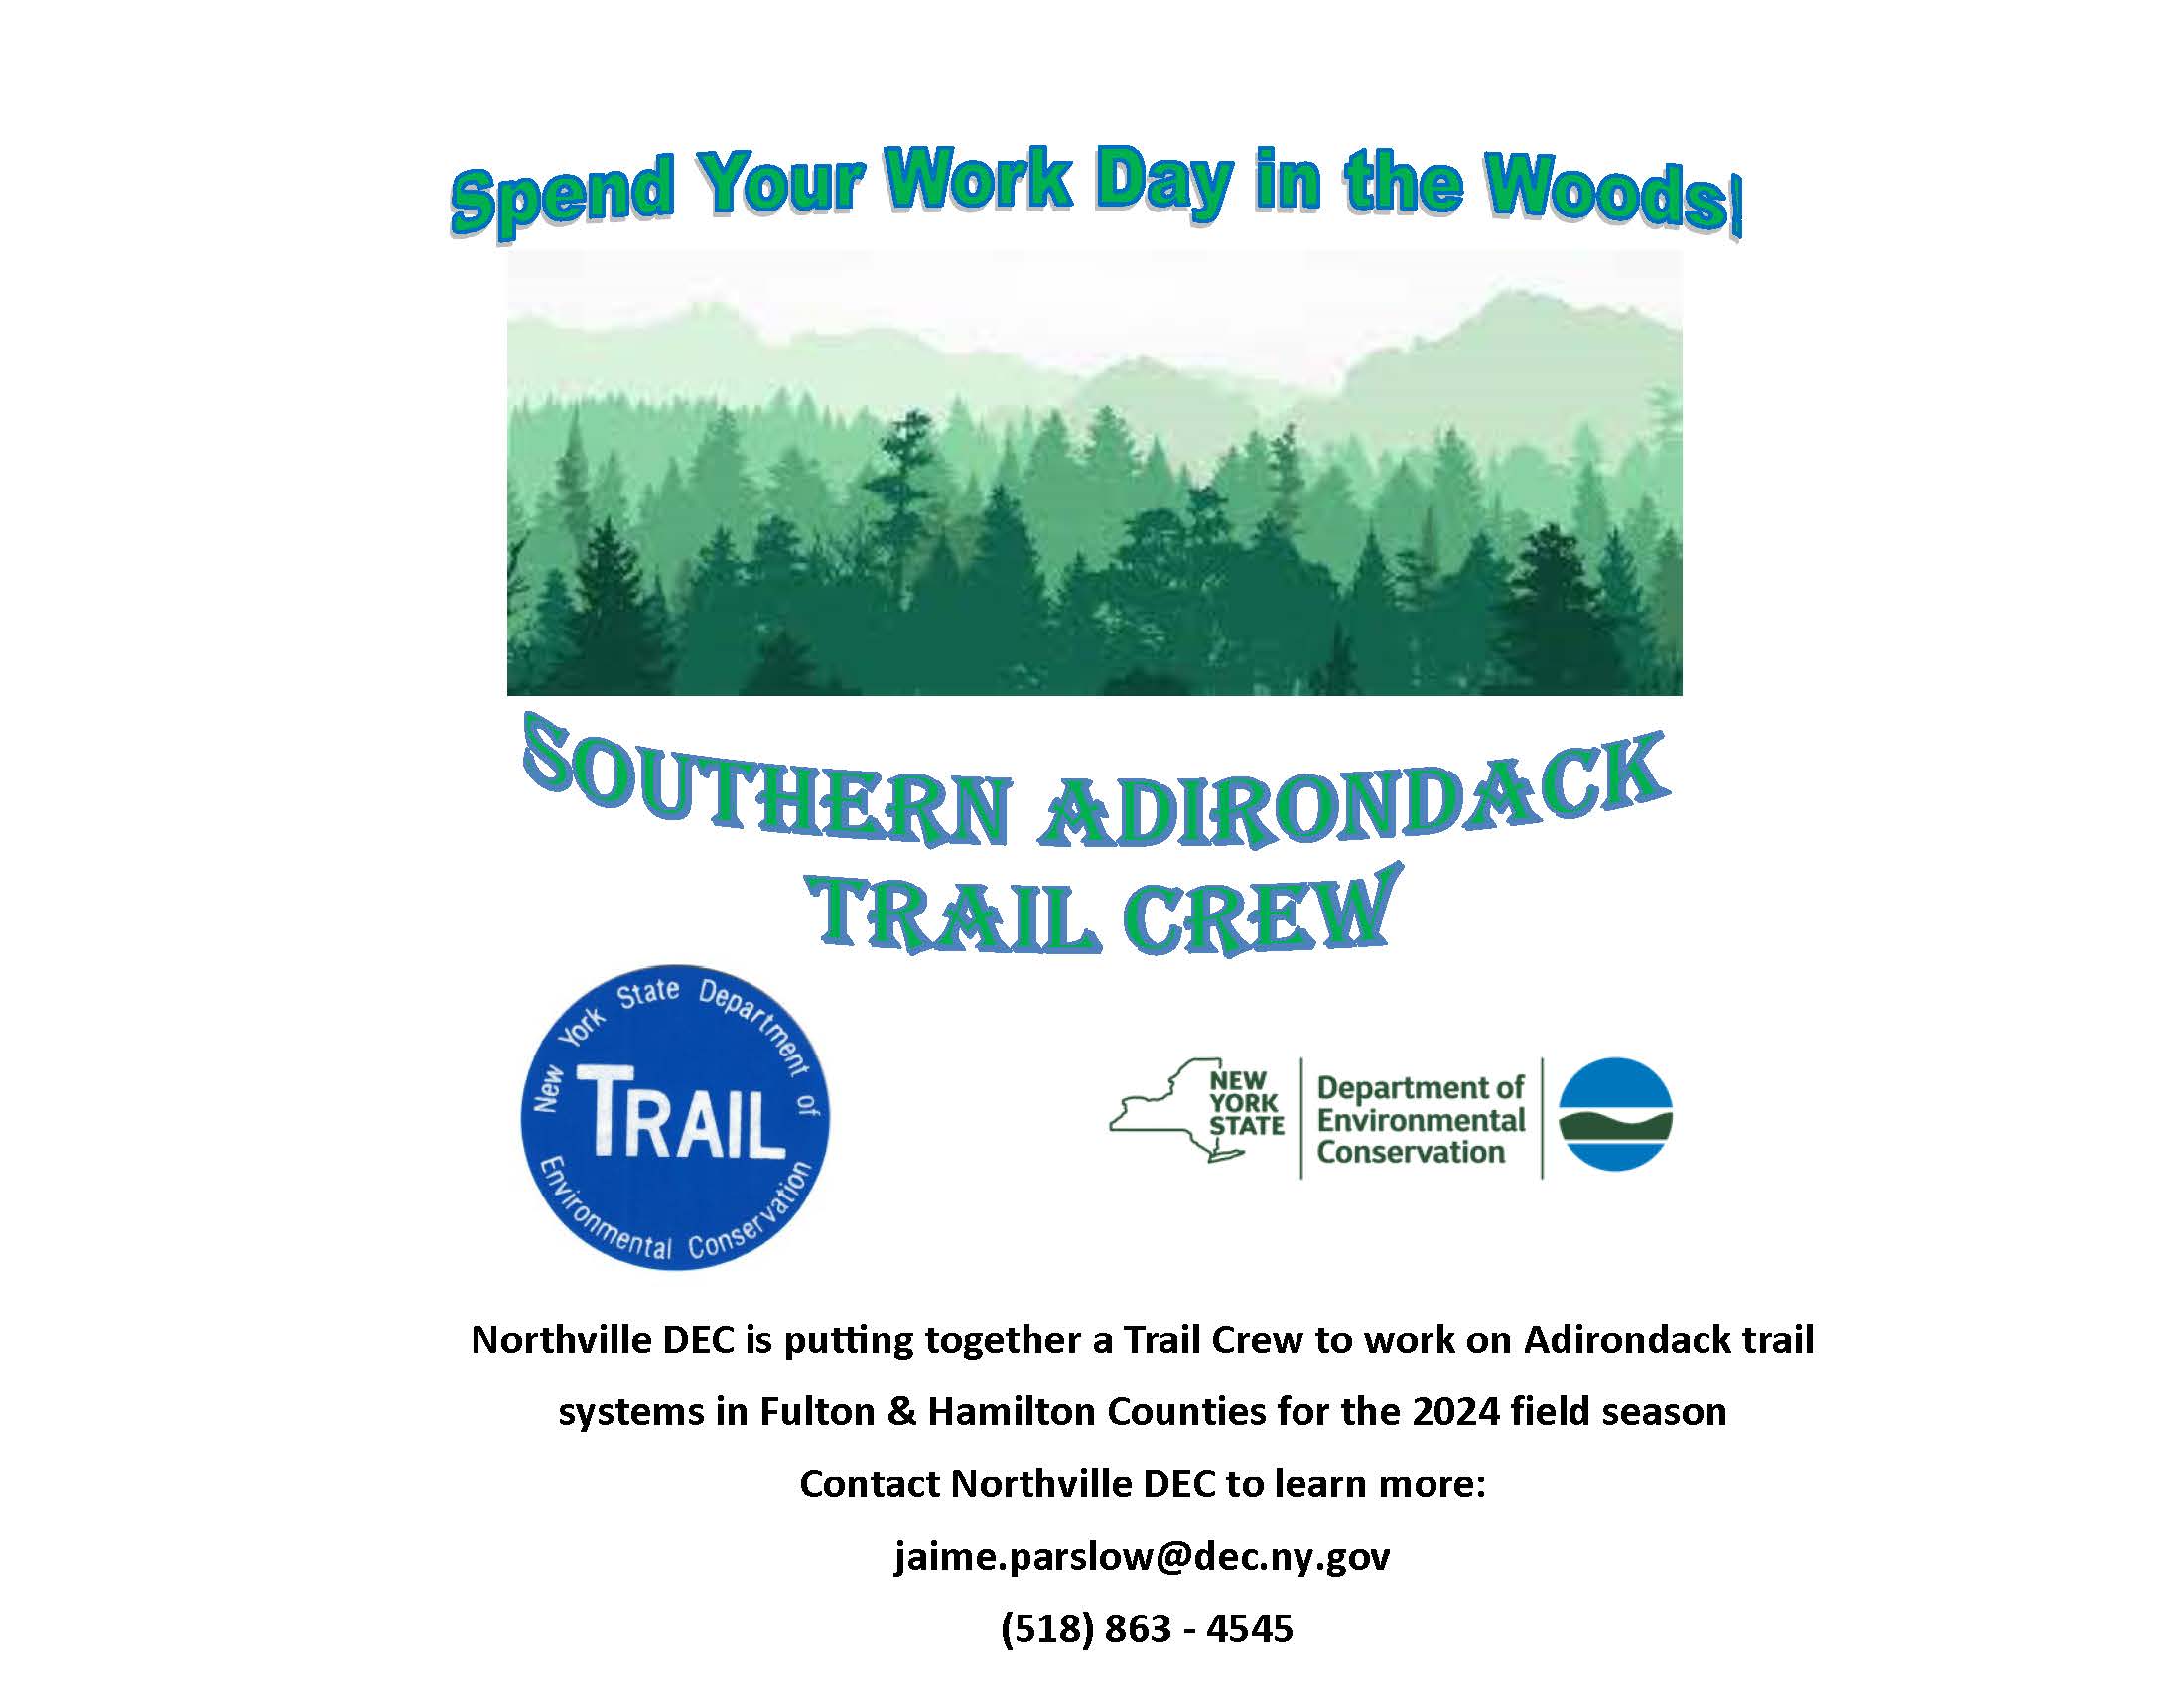 DEC Hiring a Southern Adirondack Trail Crew